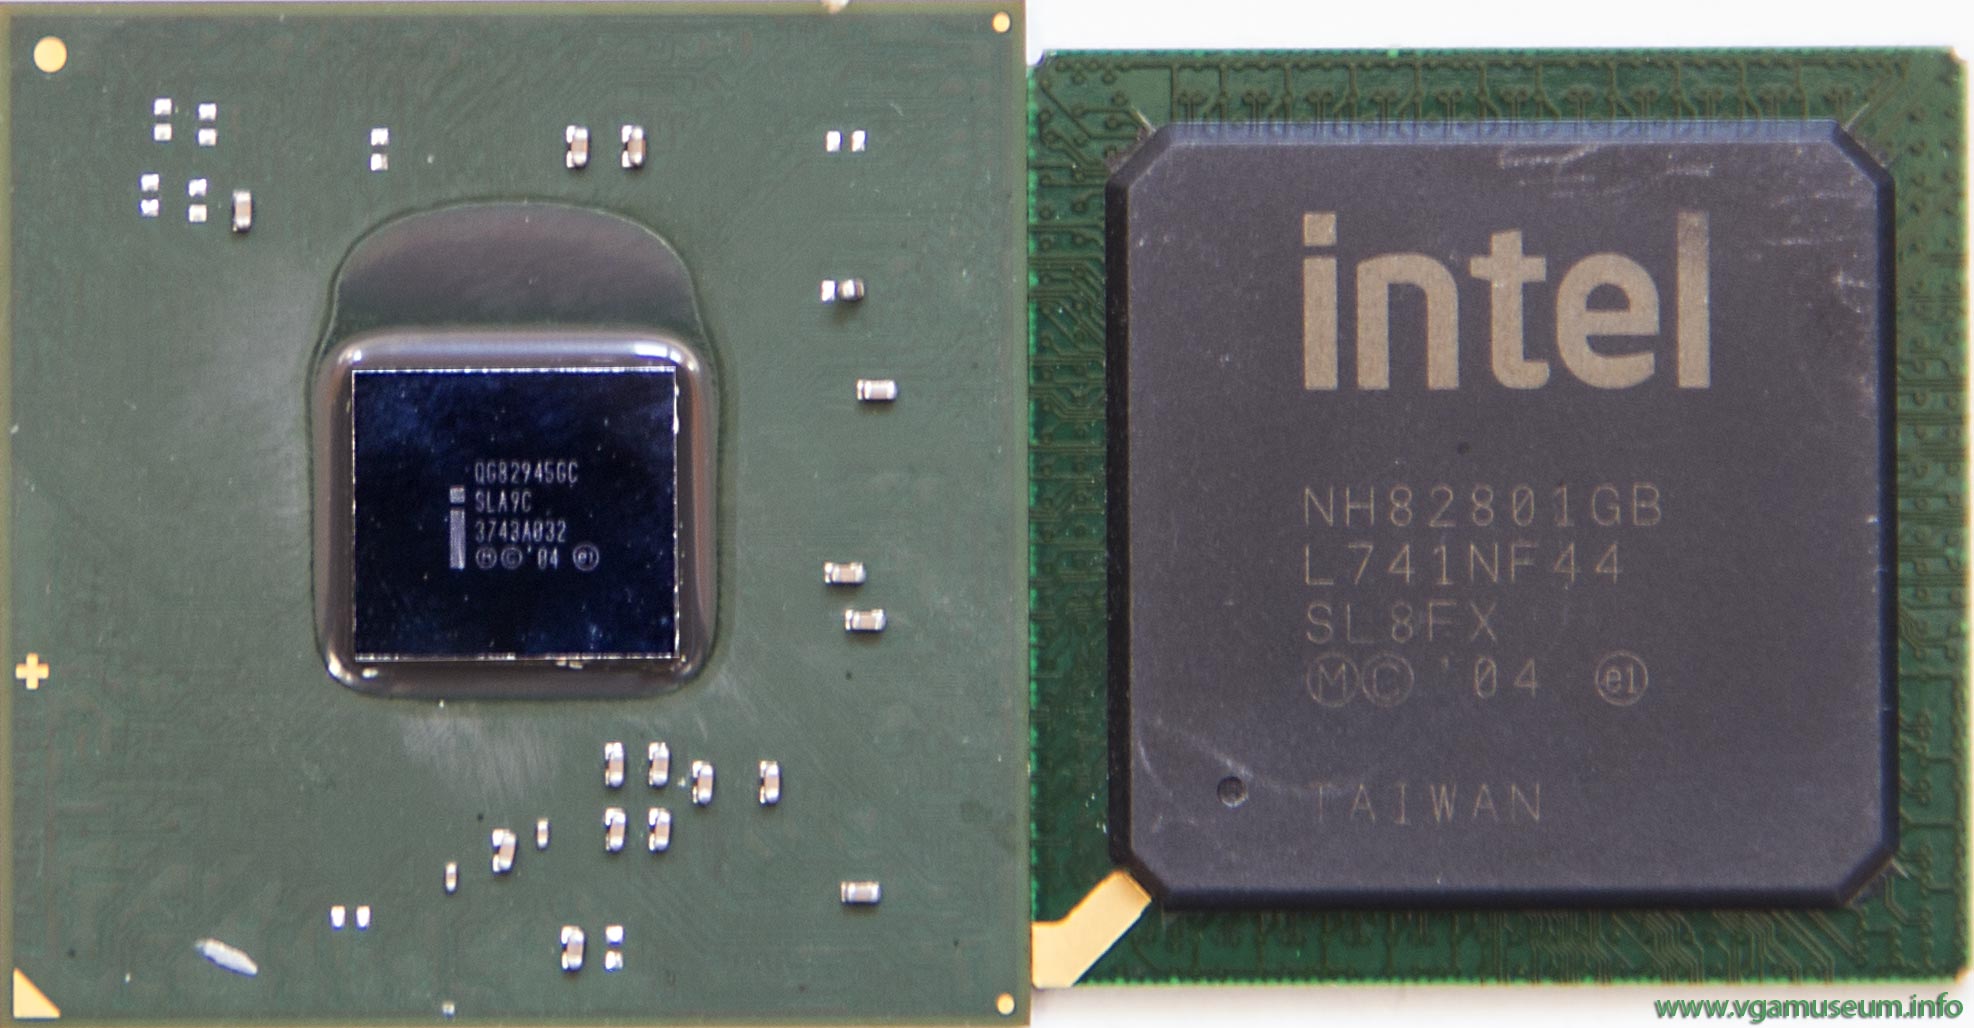 Intel gma 4500m graphics driver for mac